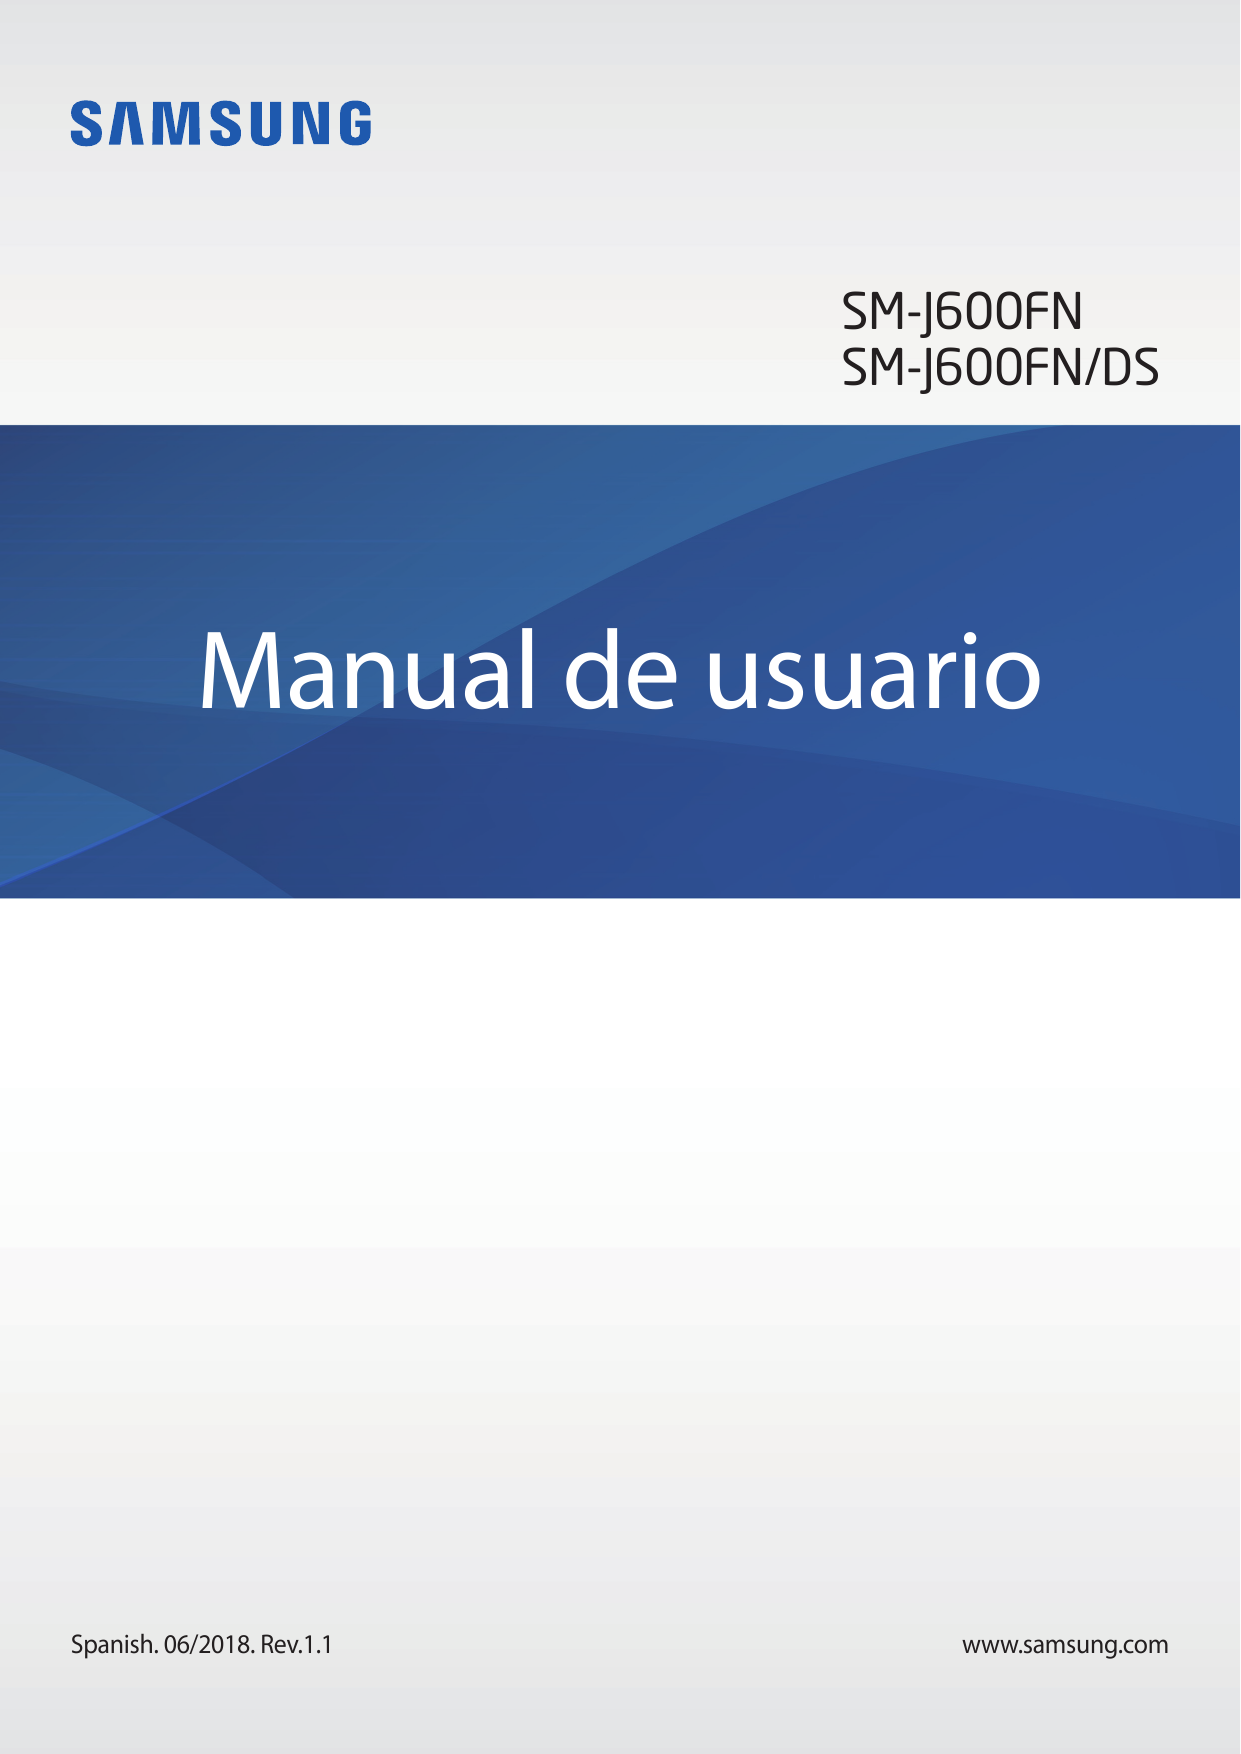 SM-J600FNSM-J600FN/DSManual de usuarioSpanish. 06/2018. Rev.1.1www.samsung.com